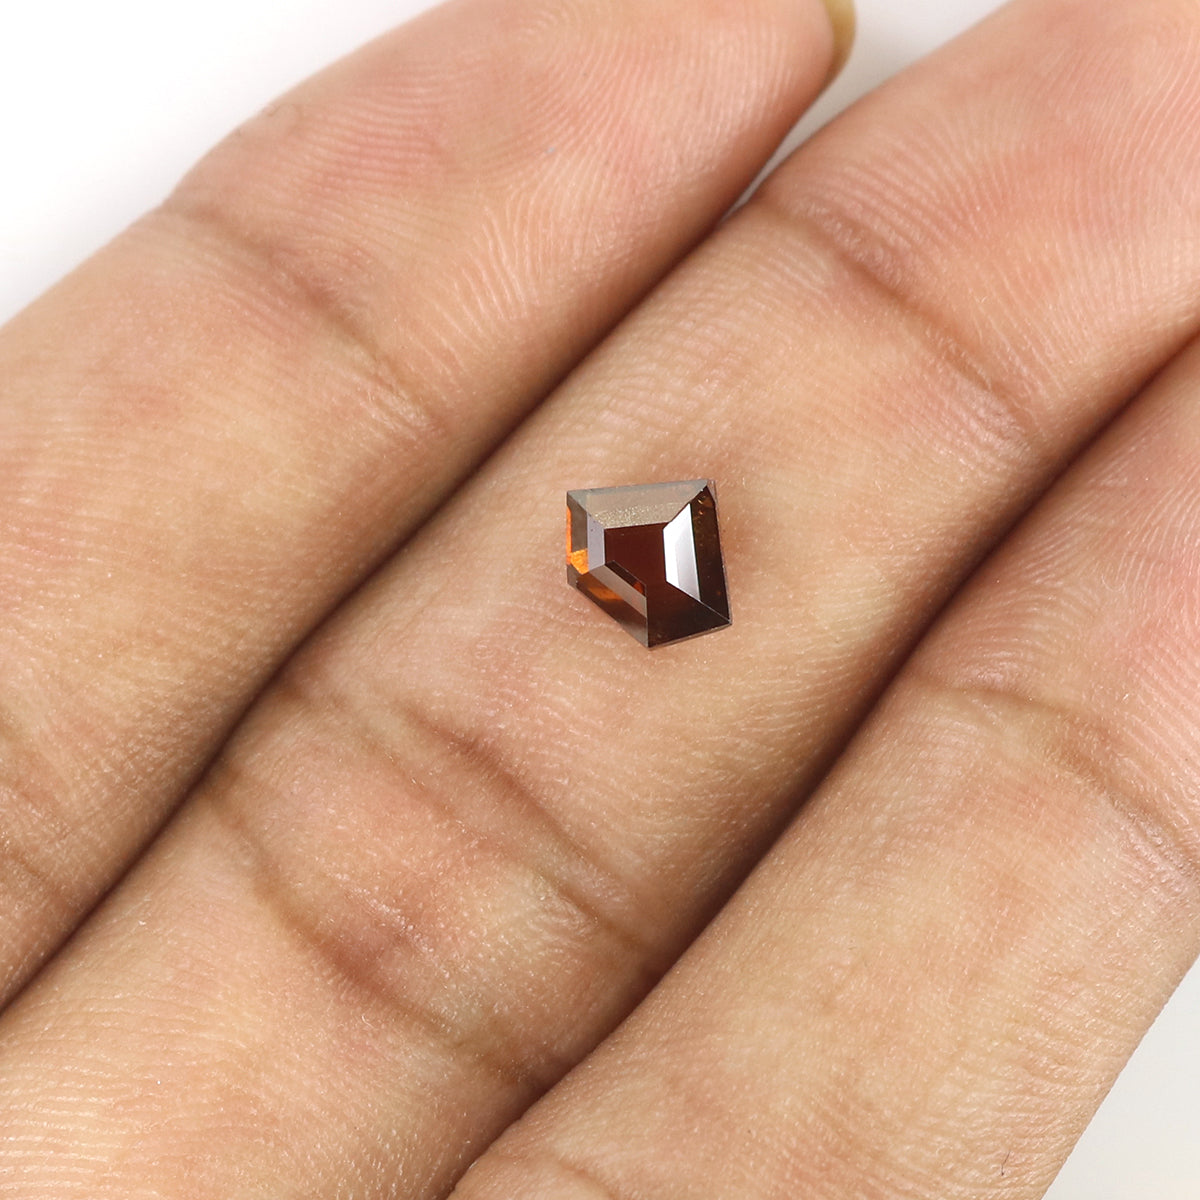 Natural Loose Shield Brown Color Diamond 0.83 CT 6.10 MM Shield Shape Rose Cut Diamond KDL1862